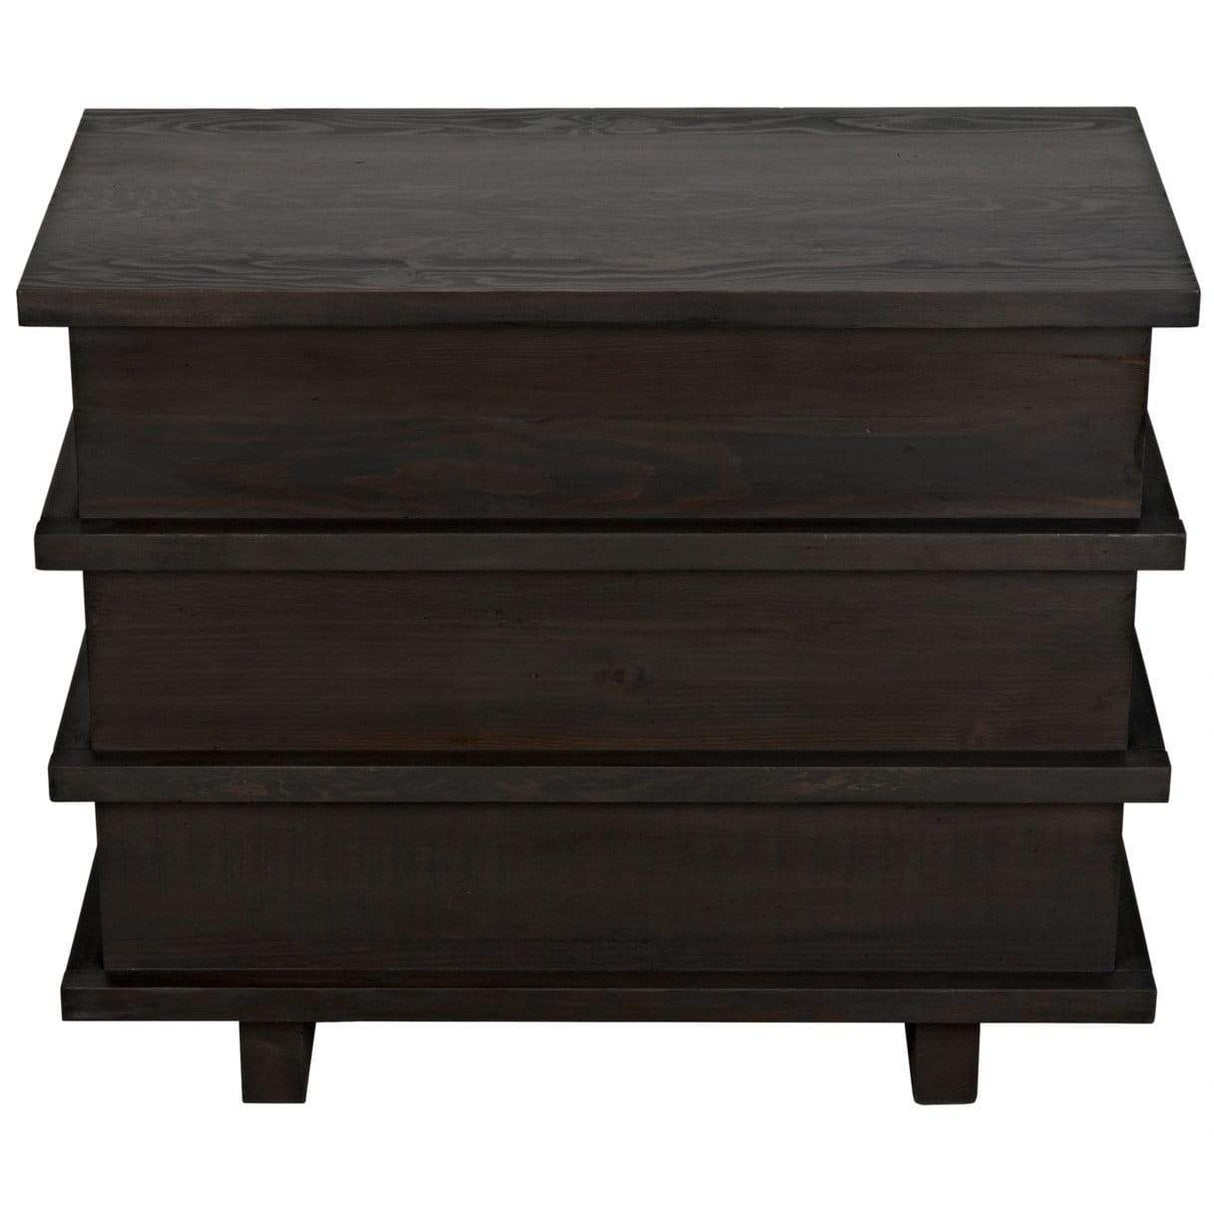 CFC Bergamont Small Dresser - Black Wax Furniture